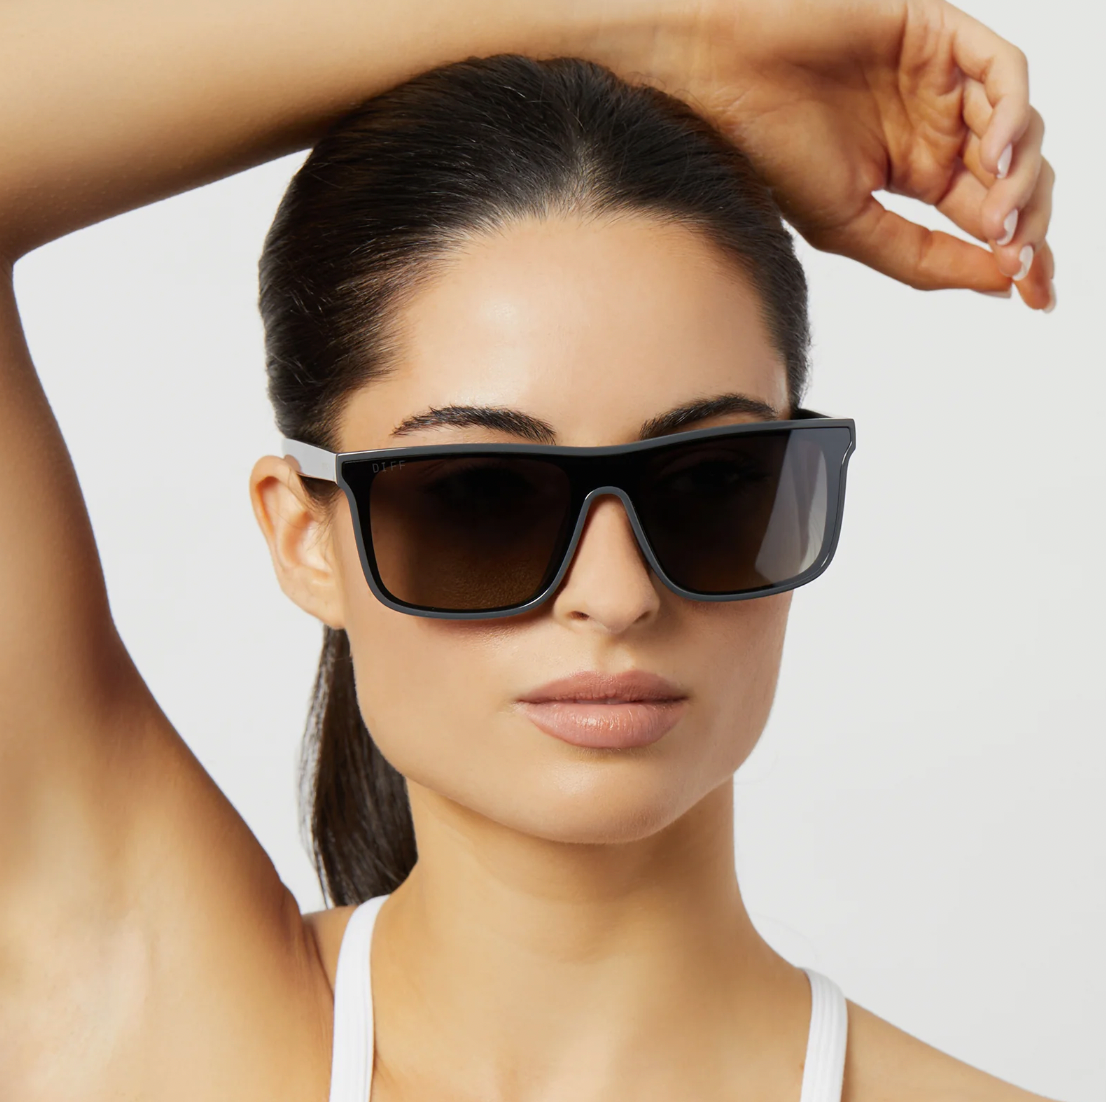 DIFF Eyewear Flash Sunglasses - Slate Grey + Grey Gradient